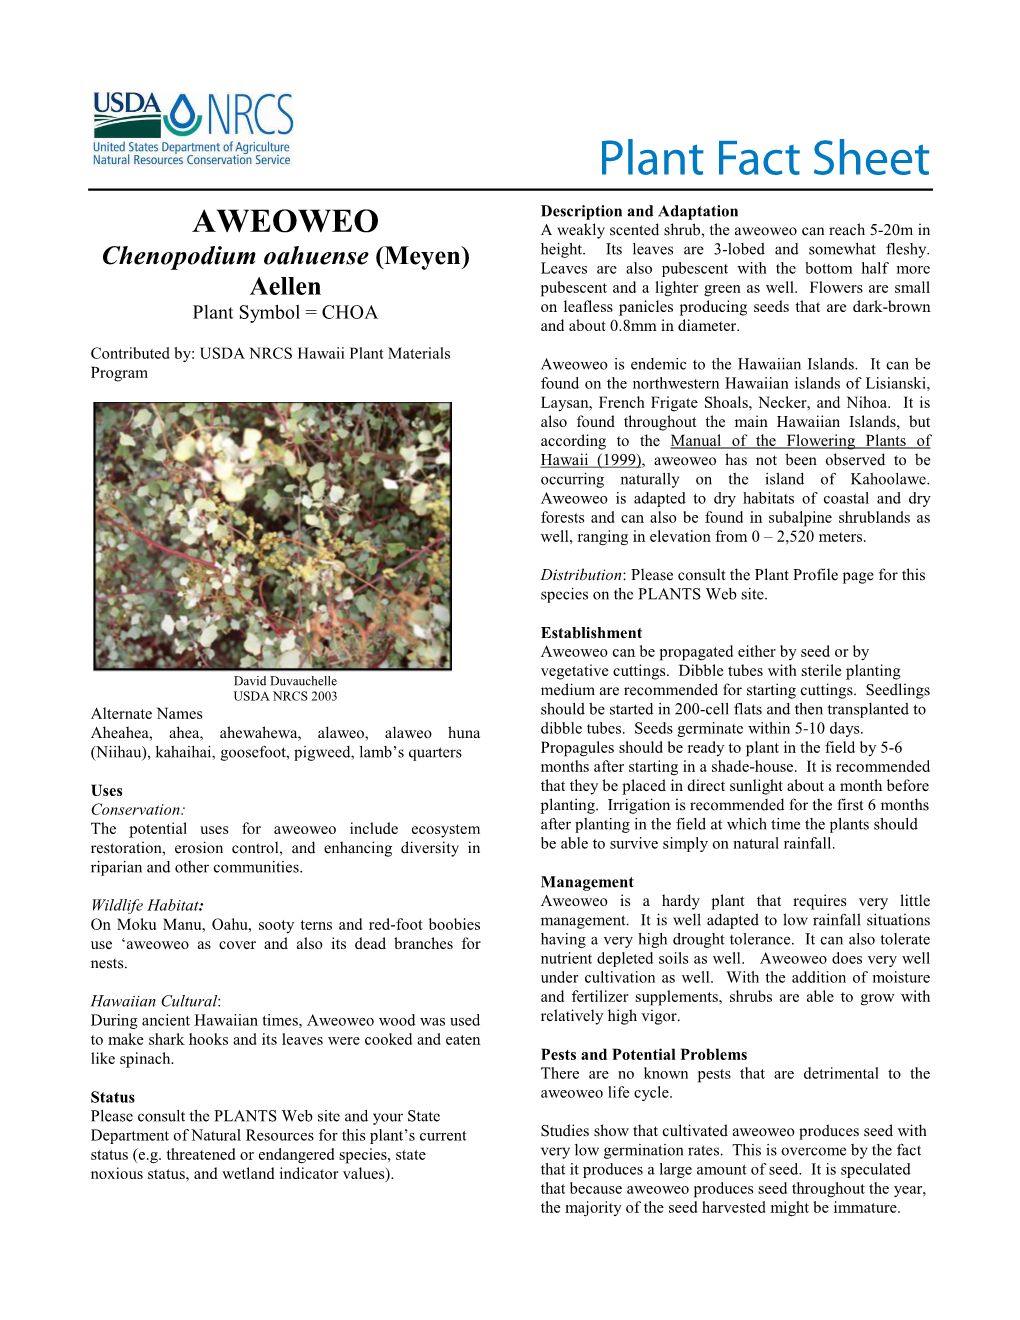 Aweoweo (Chenopodium Oahuense) Plant Fact Sheet